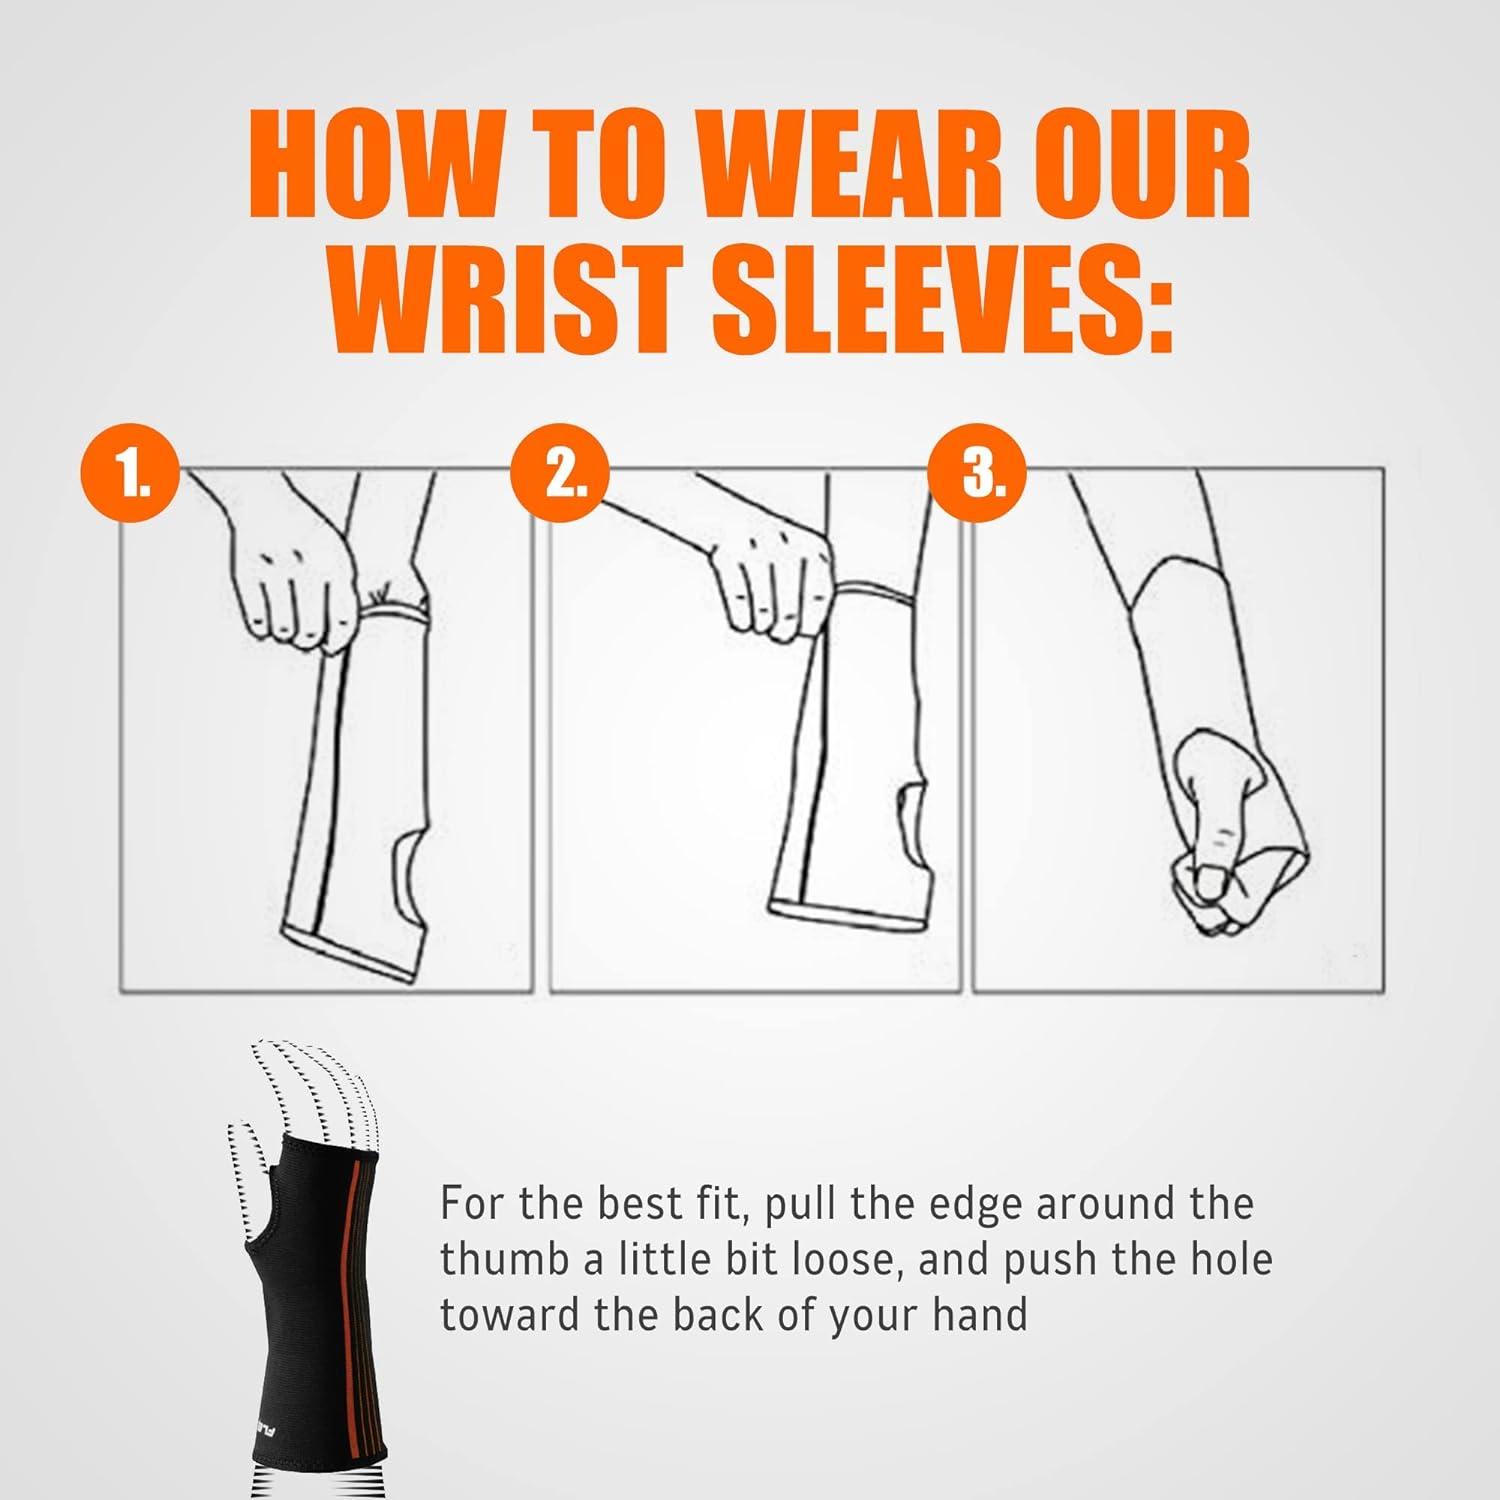 Wrist Support - Medium